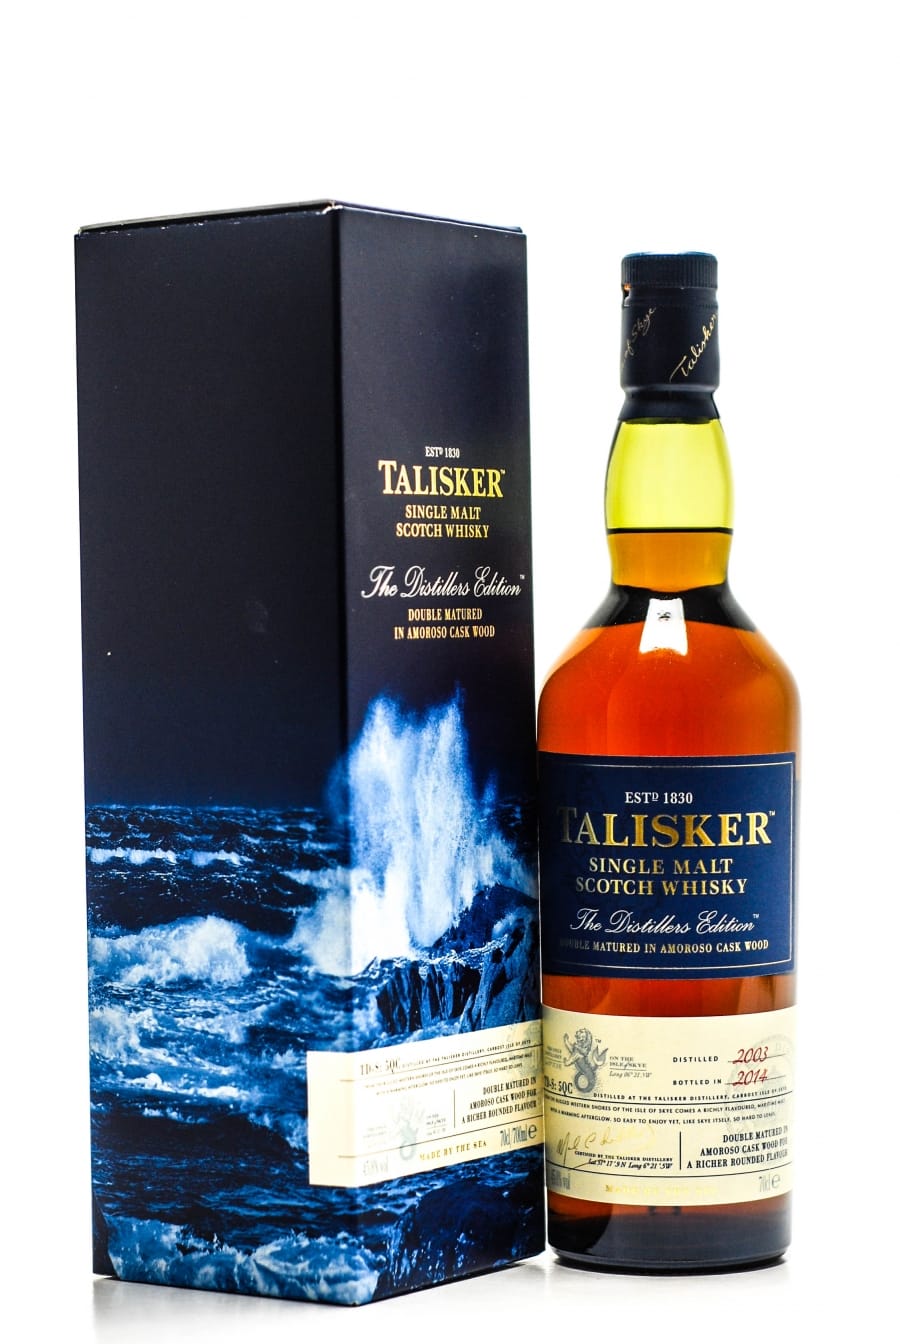 Talisker - Distillers Edition 2014 45.8% 2003 In Original Container